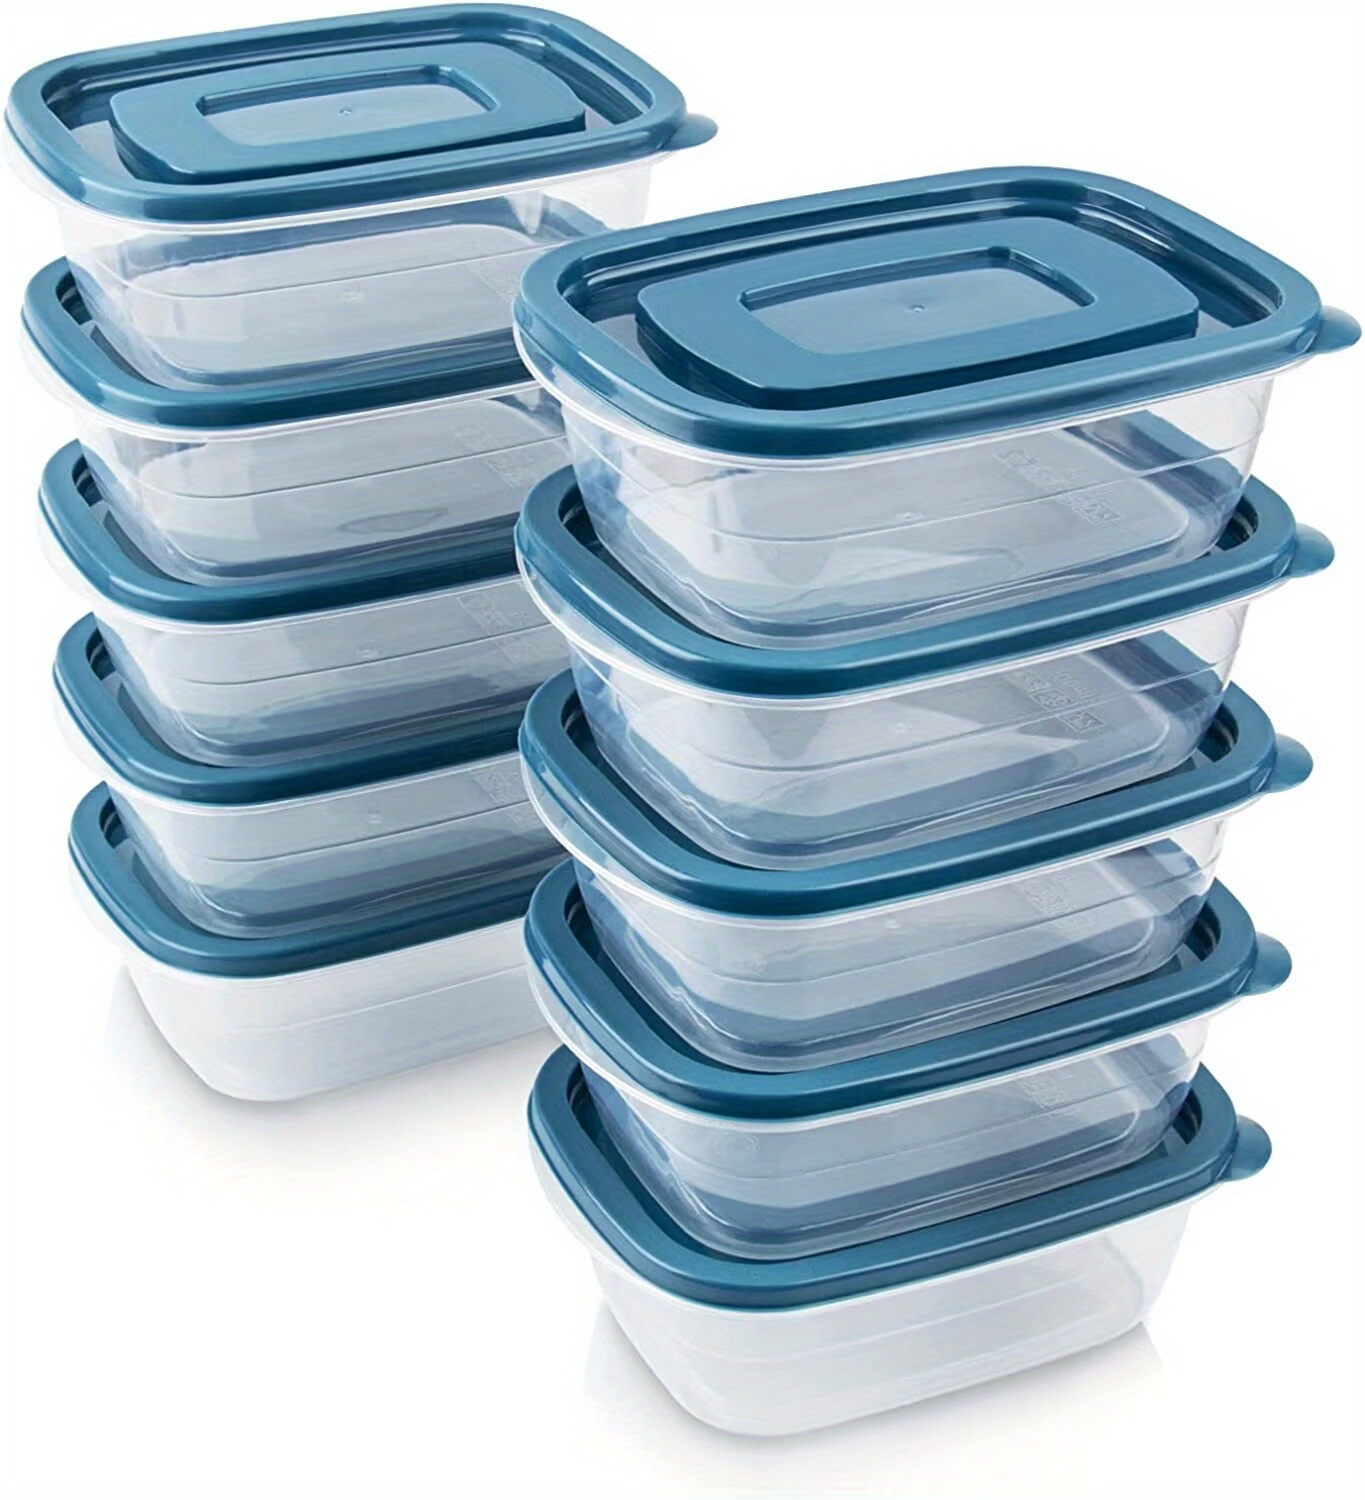  Plastic Boxes For Storage Set